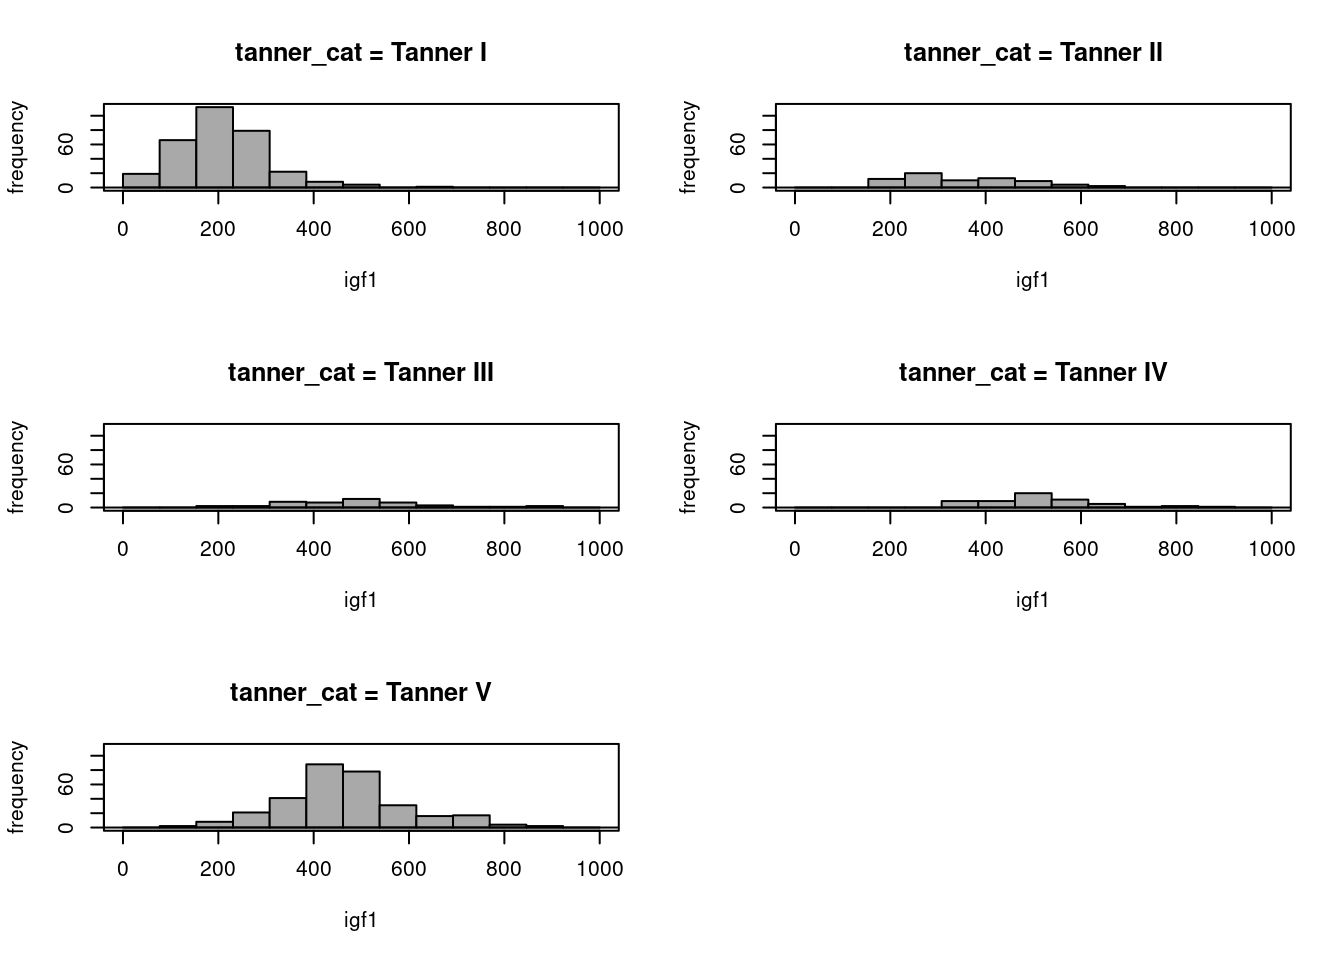 Histogramas de igf1 para cada categoria de Tanner.